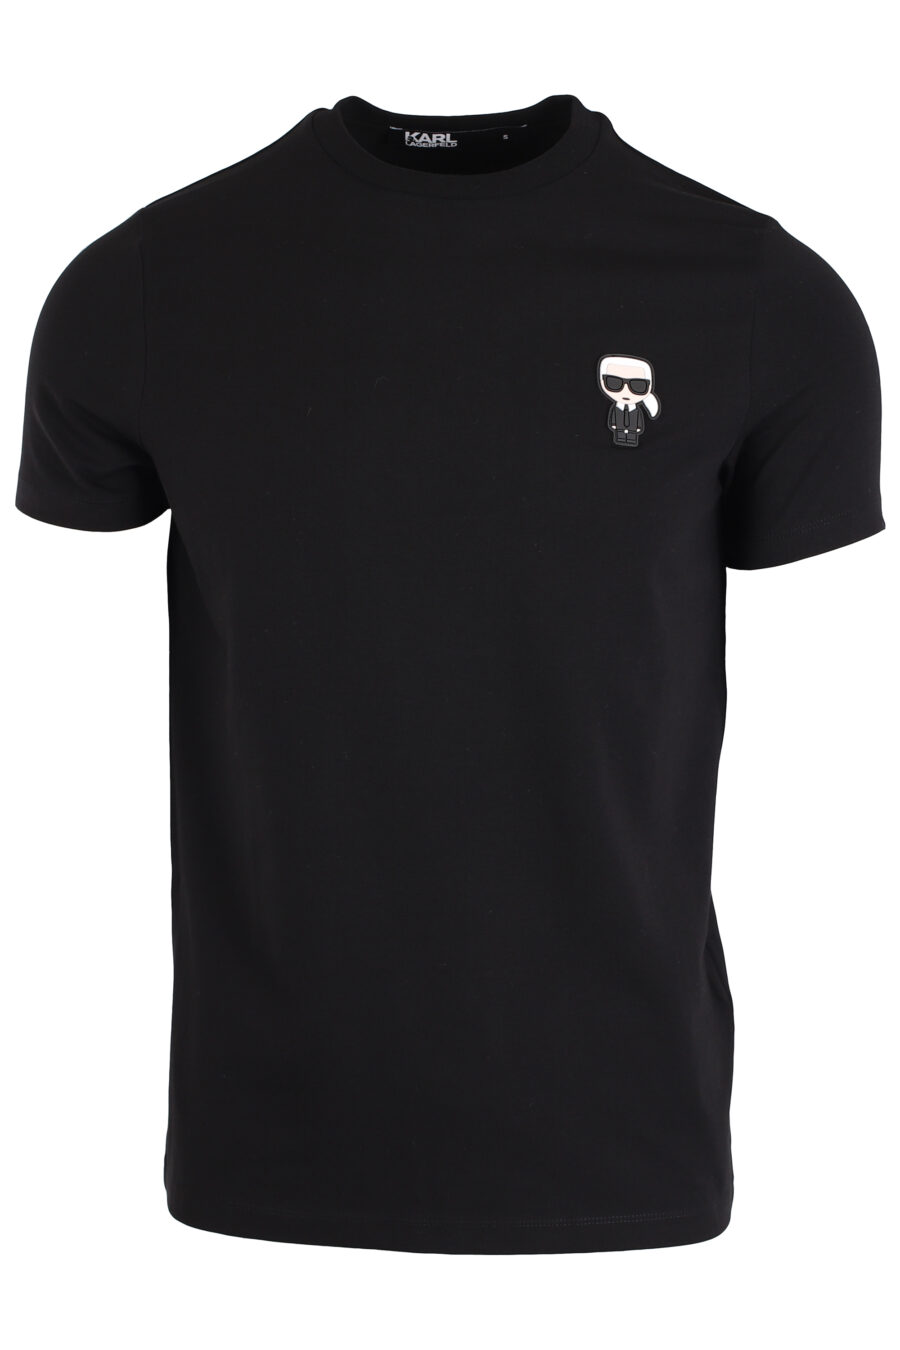 Camiseta negra con logo "ikonik" - IMG 3976